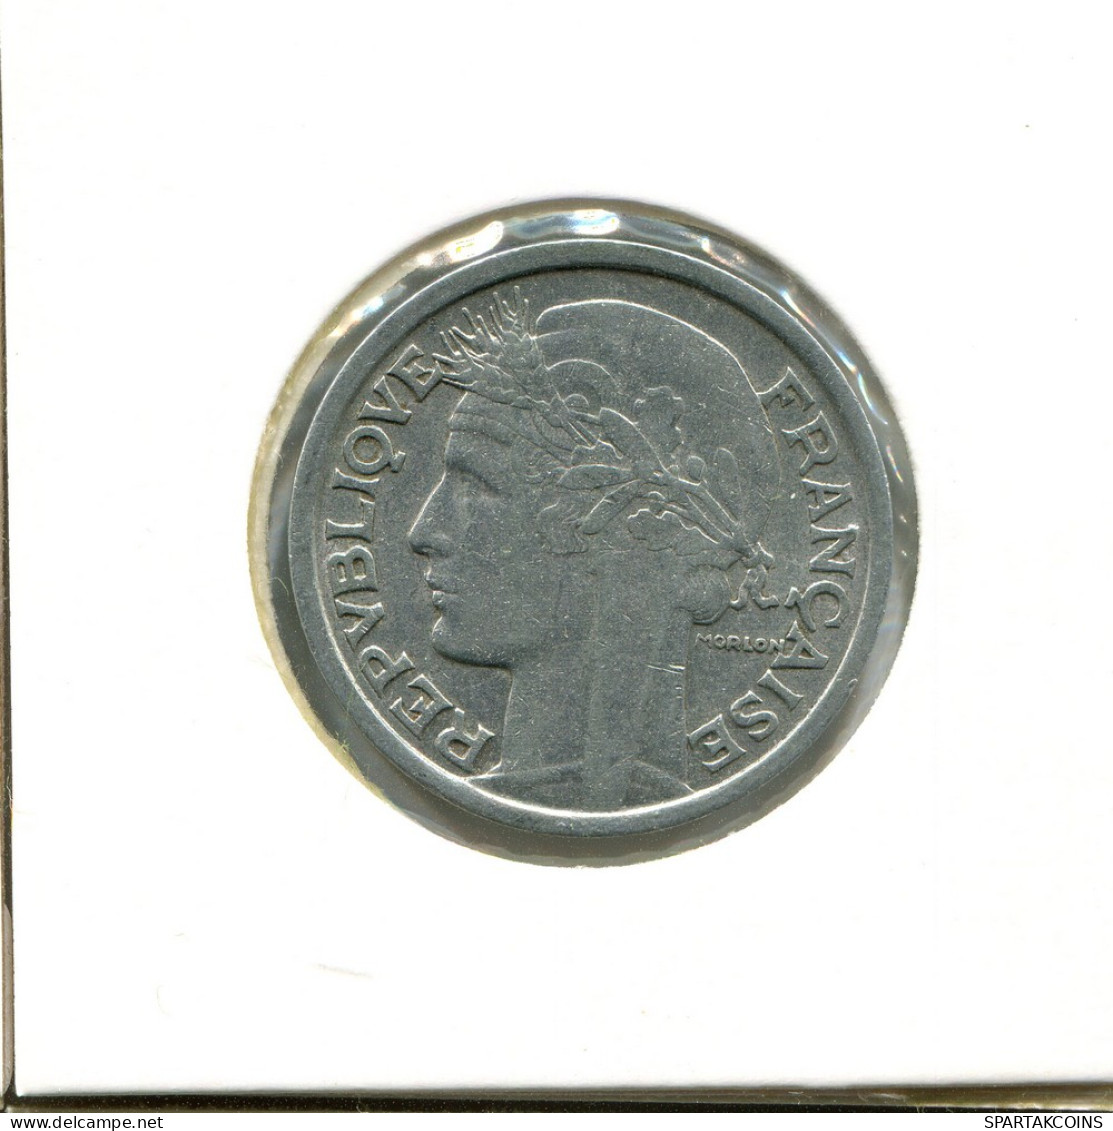 2 FRANCS 1950 B FRANKREICH FRANCE Französisch Münze #BA796.D - 2 Francs